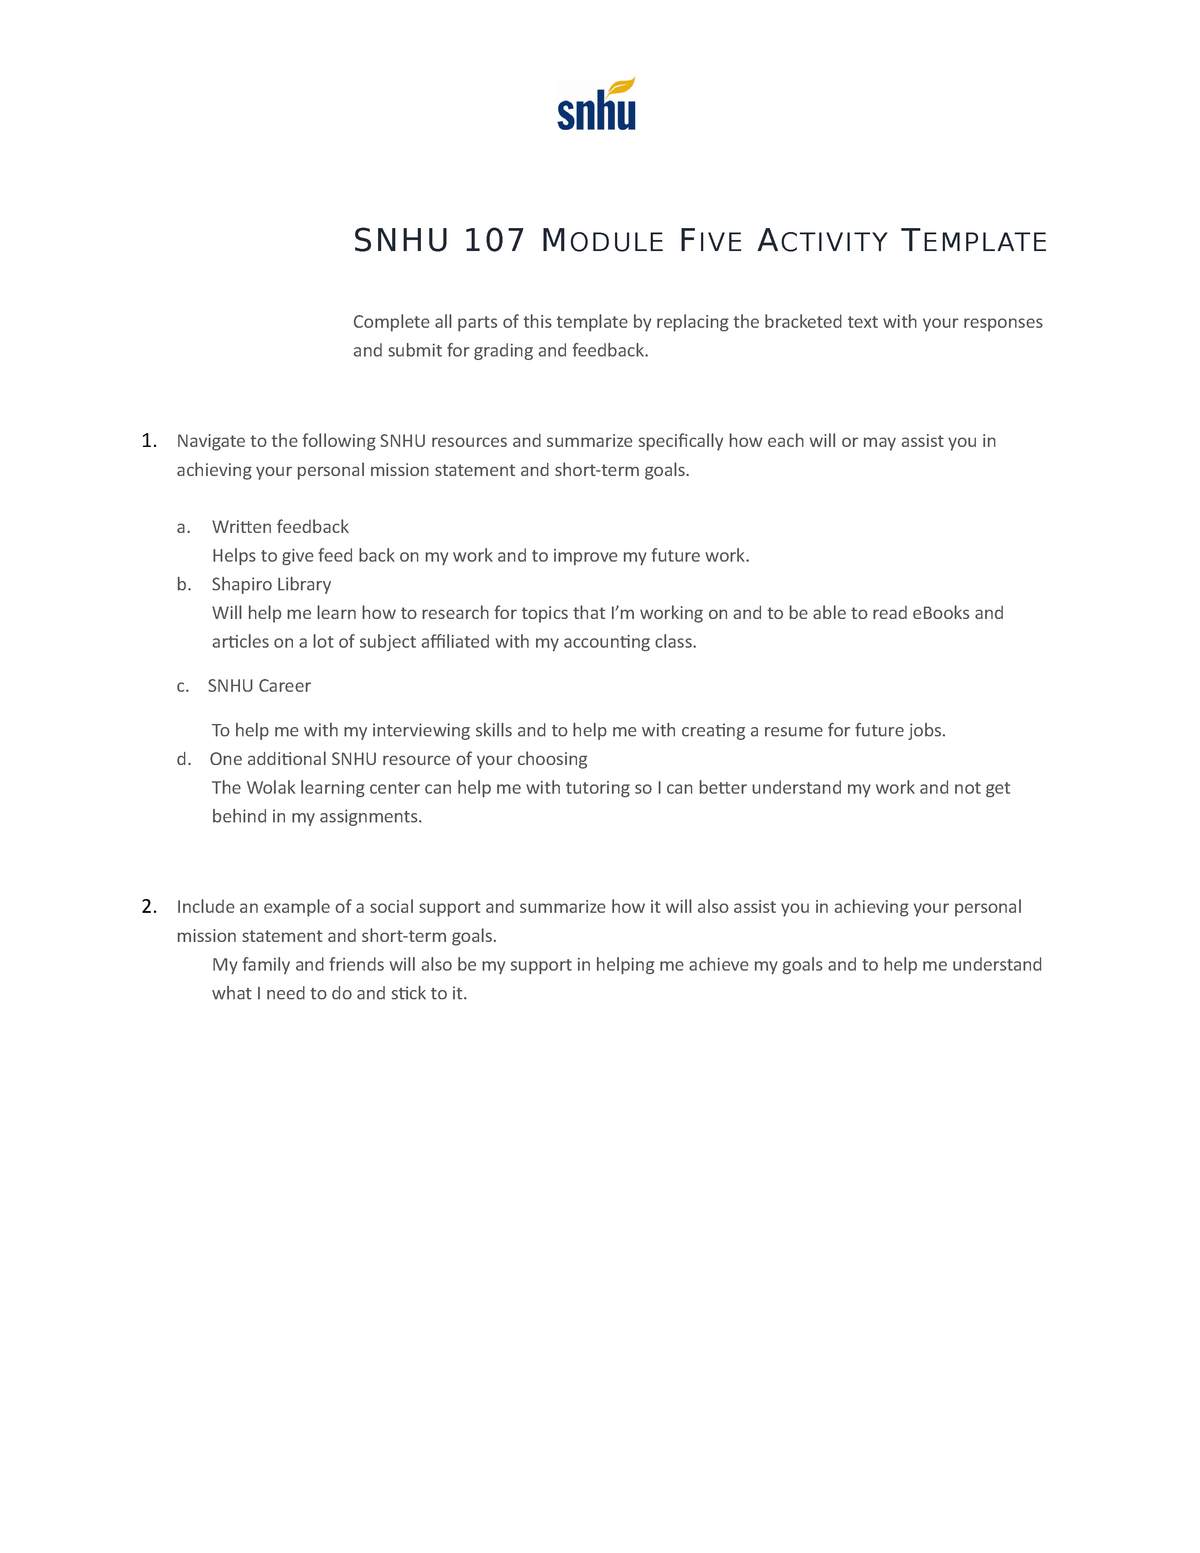 SNHU+107+Module+Five+Activity+Template SNHU 107 MODULE FIVE ACTIVITY